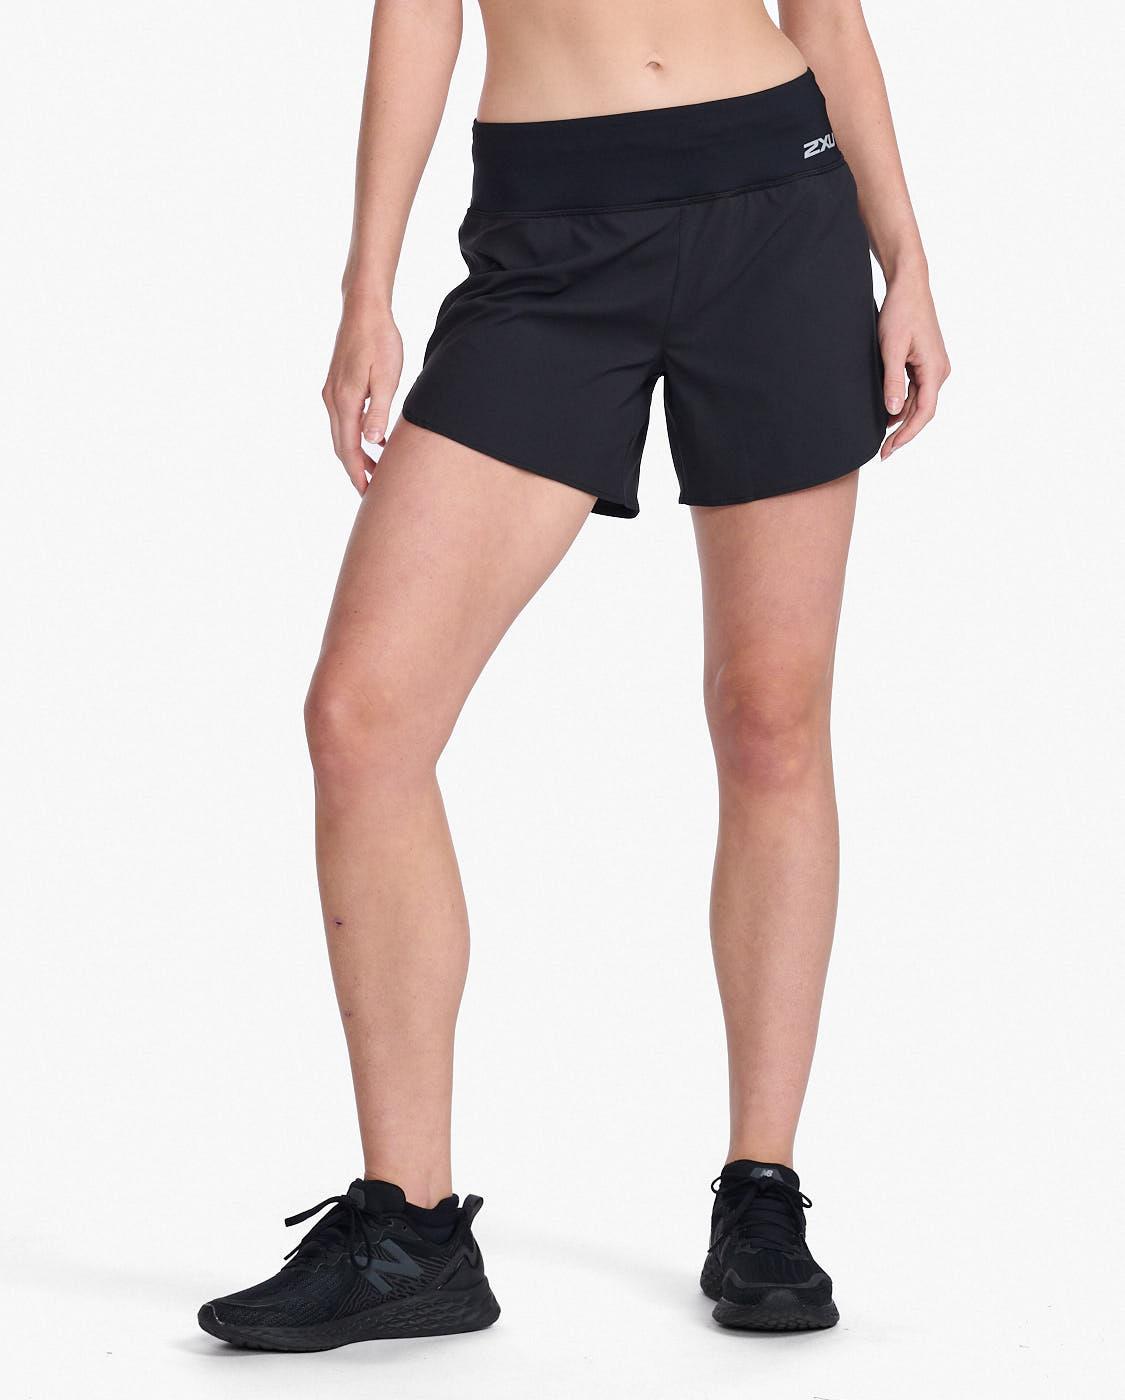 2xu Womens Aero 5 Shorts - Black/silver Reflective